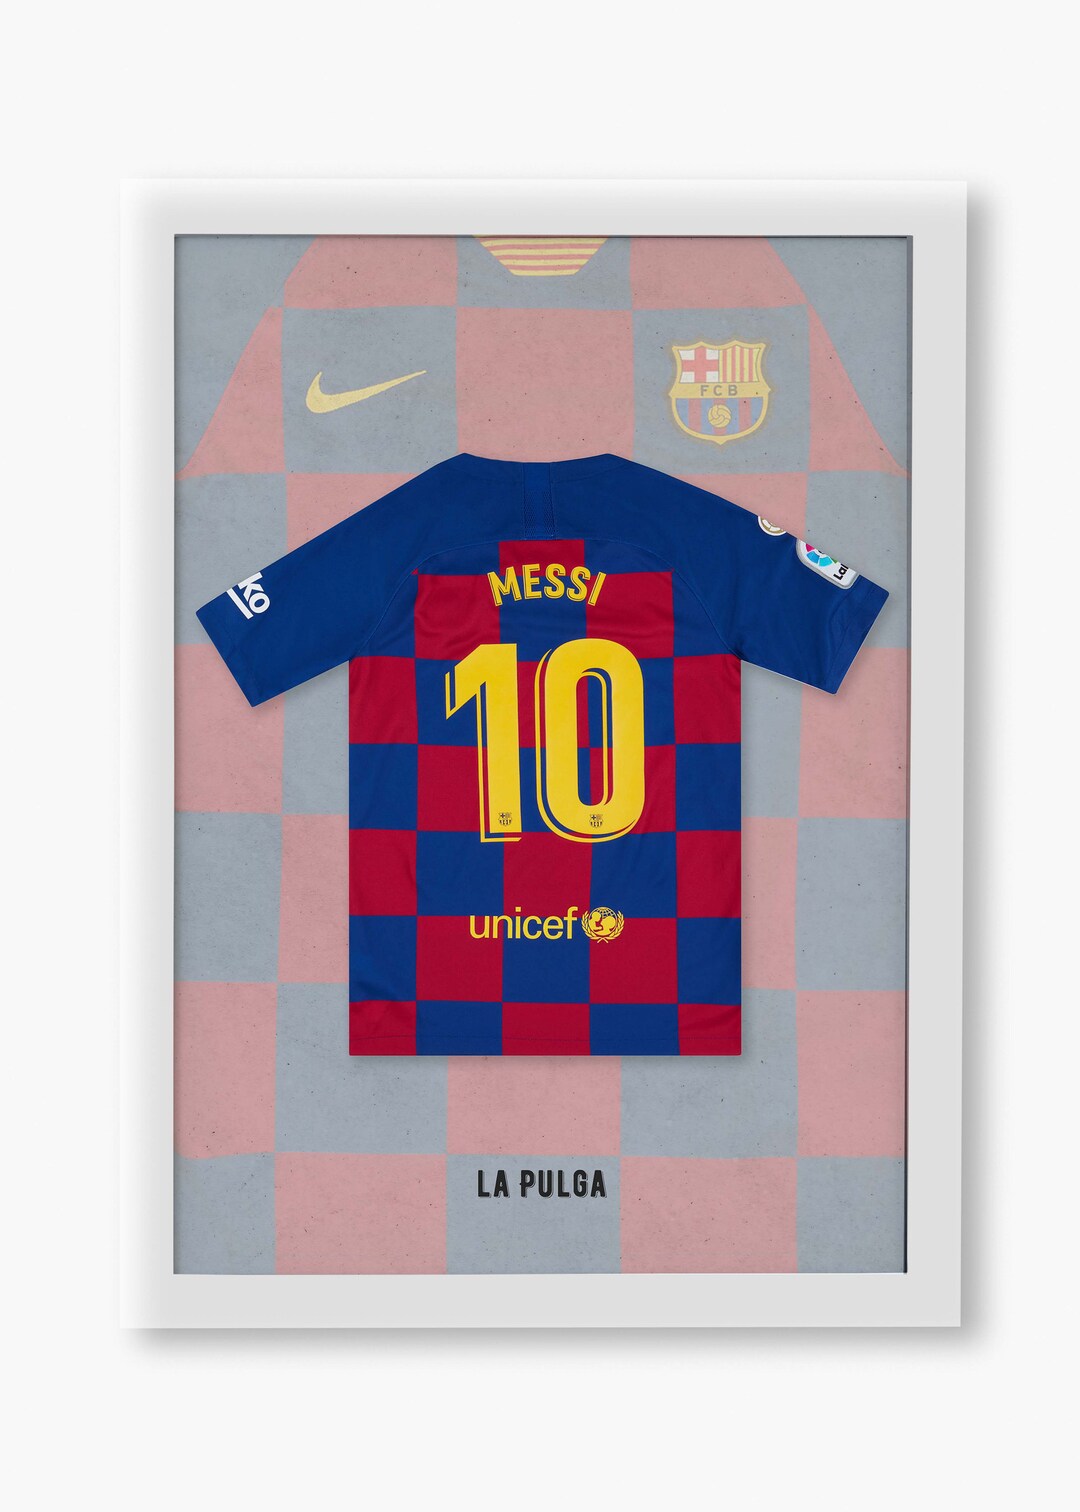 Messi La Pulga Barca Jersey, Photorealistic Thermal Print, Football ...